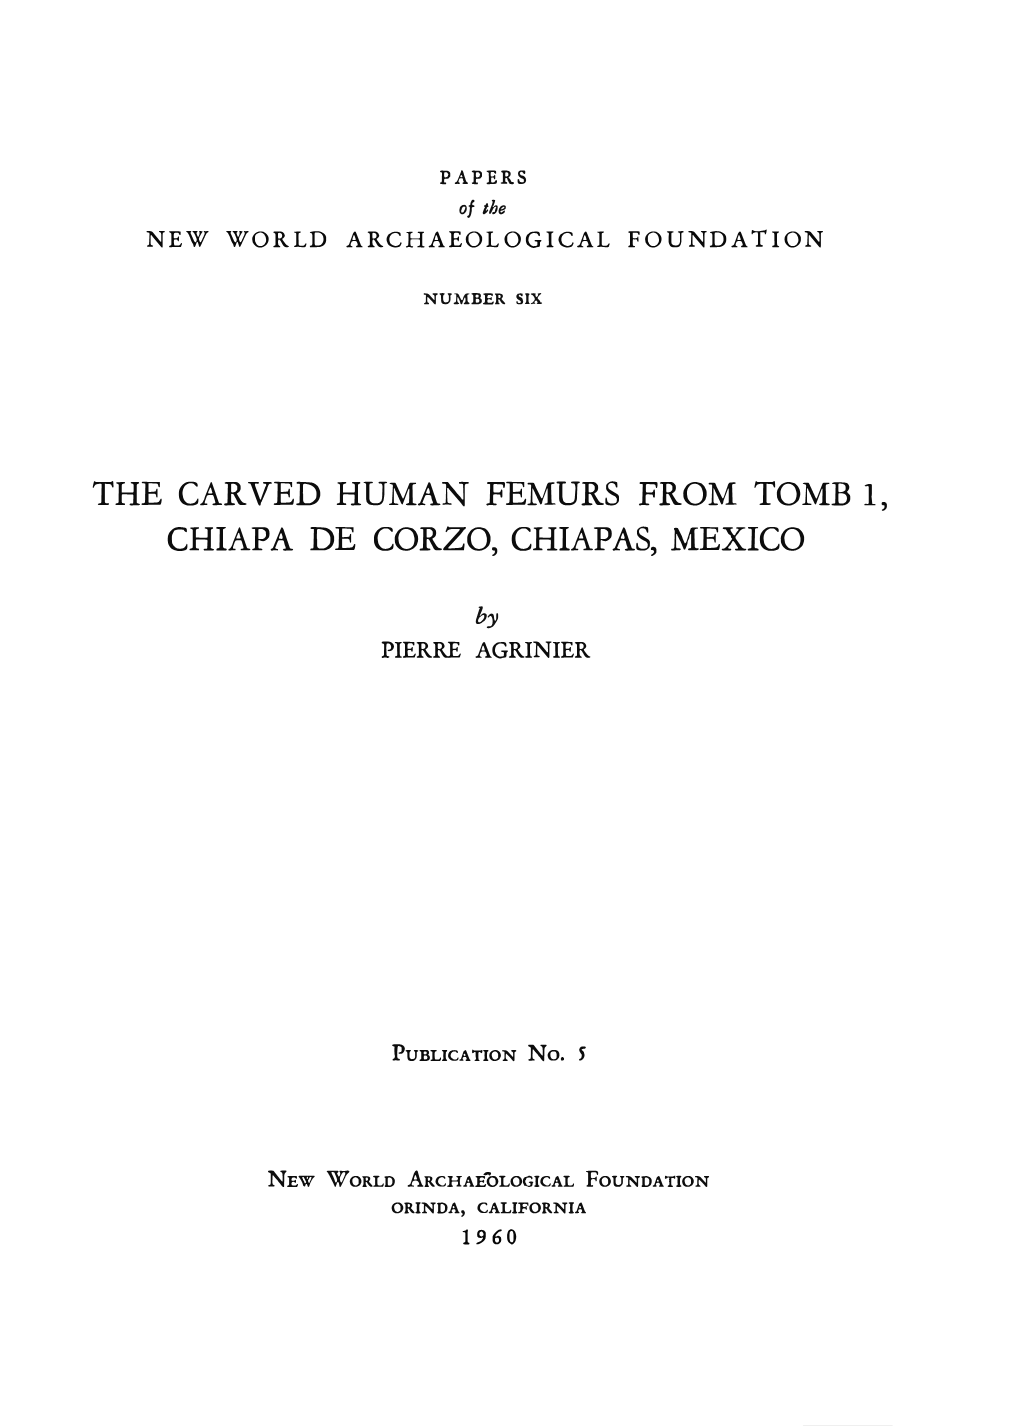 The Carved Human Femprs from Tomb 1, Chiapa De Corzo, Chiapas, Mexico